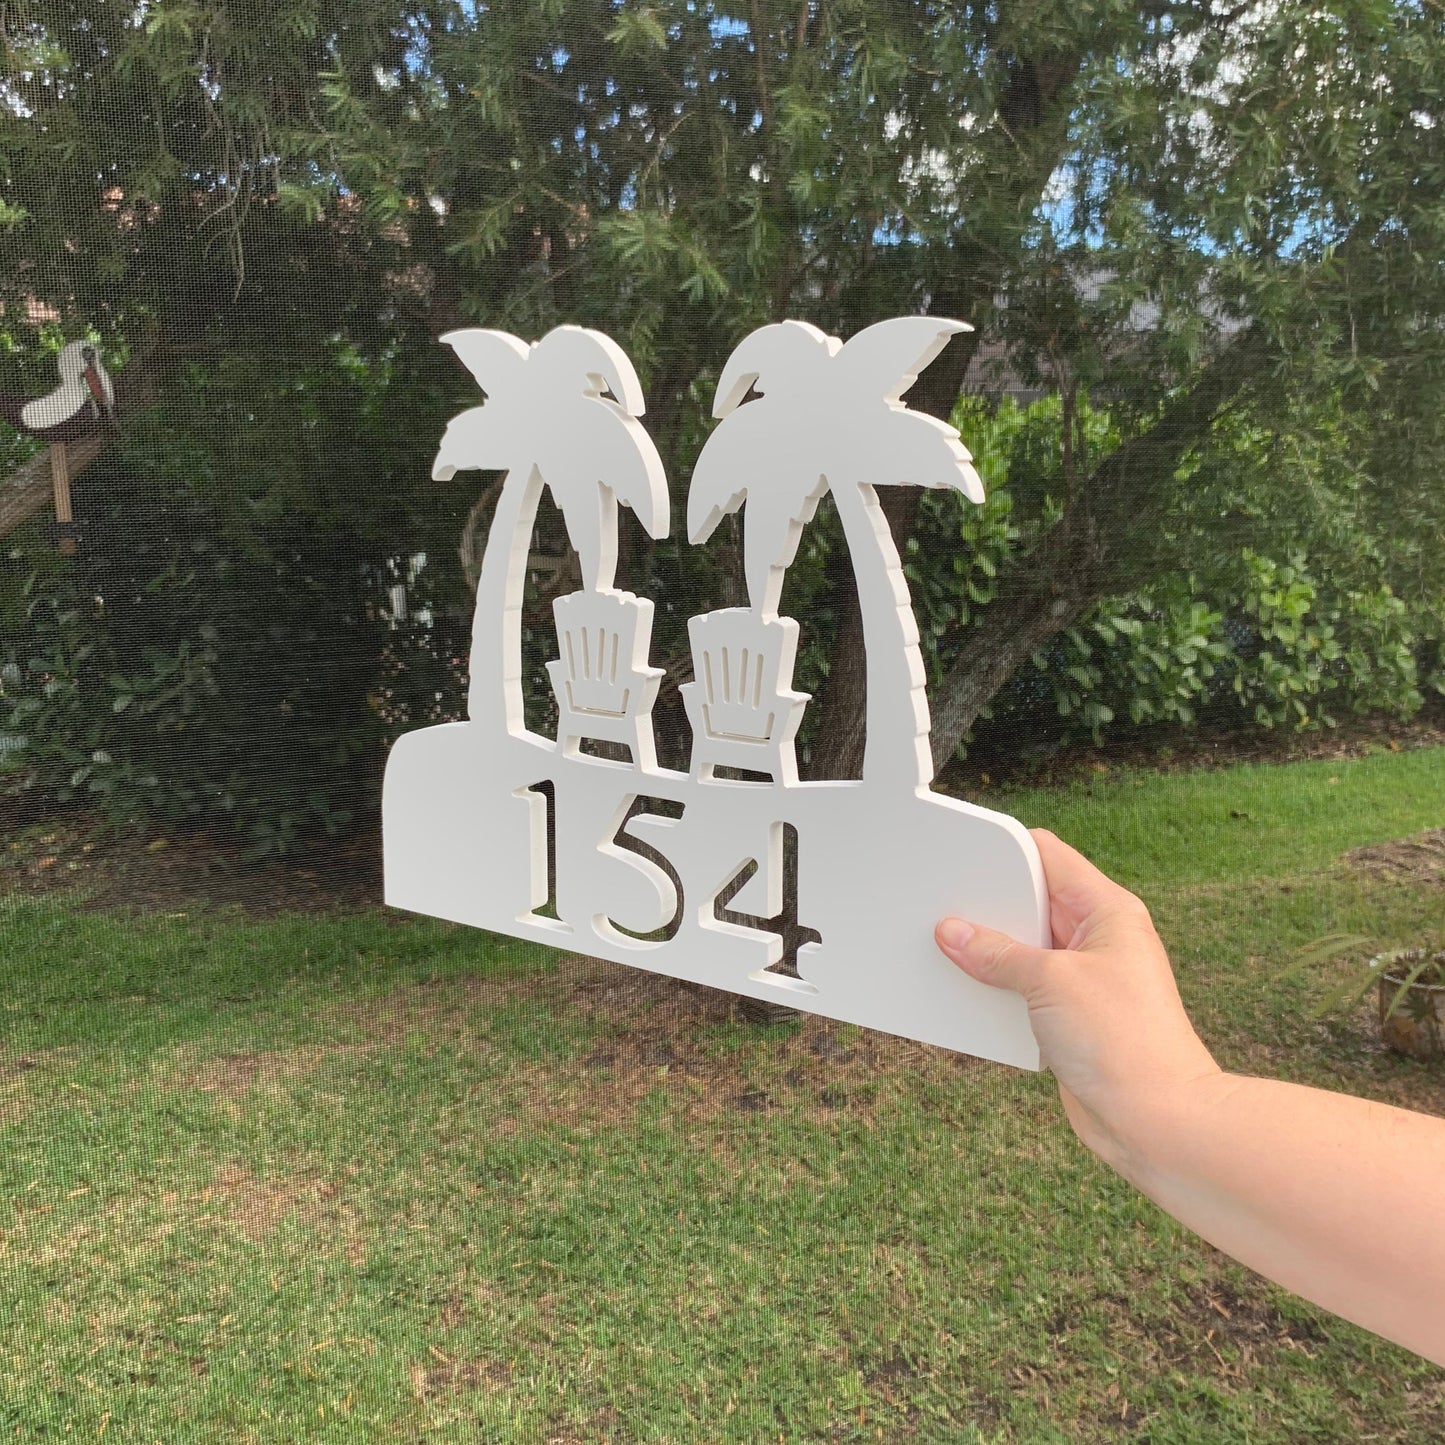 House Number Plaque - Palm Adirondaks, Address Plaque, Custom, Personalized, Housewarming Gift, Outdoor Decor, Ships Free To Mainland USA